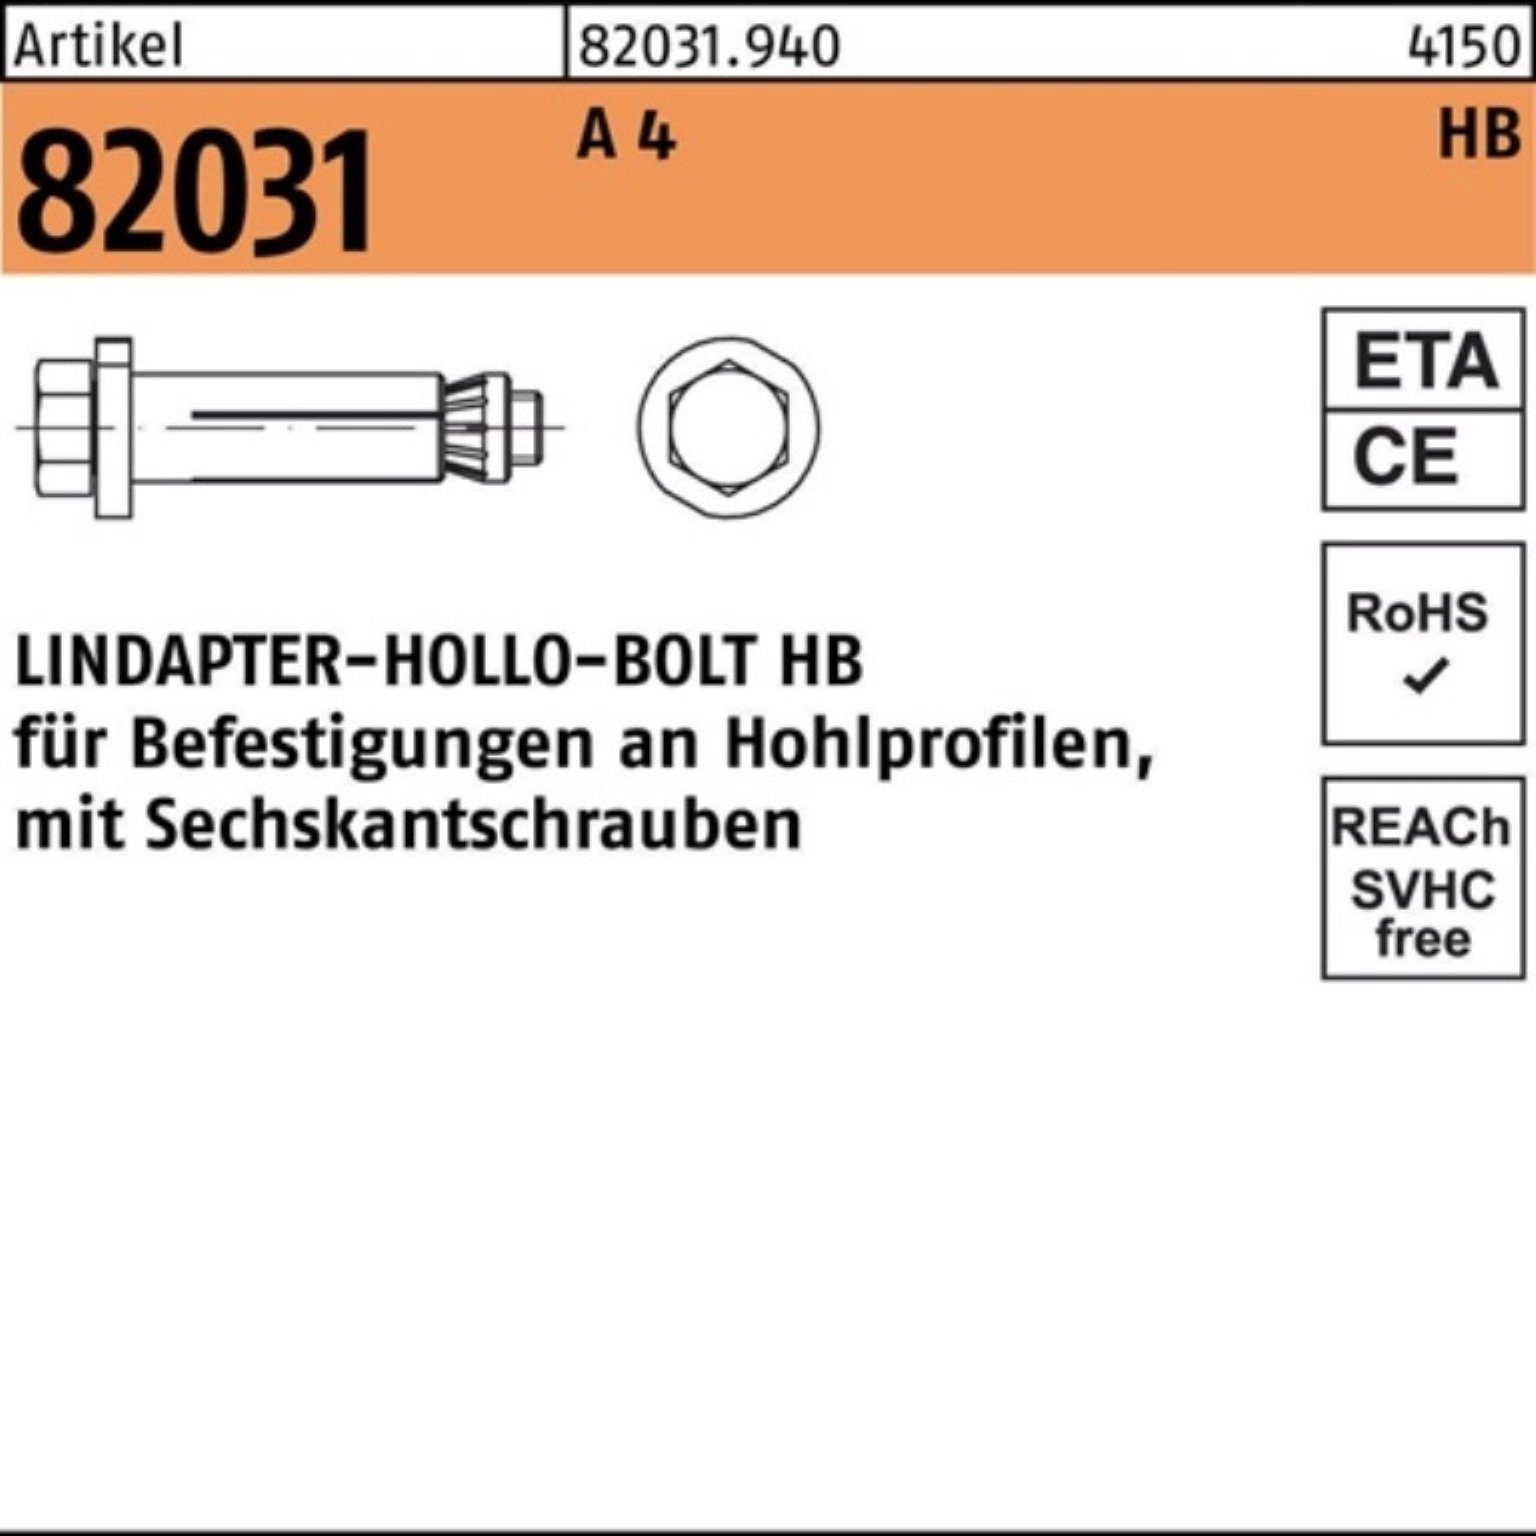 Pack Hohlraumdübel 82031 100er A 1 4 Lindapter Hohlraumdübel 16-2 (100/50) R 6-ktschraube HB